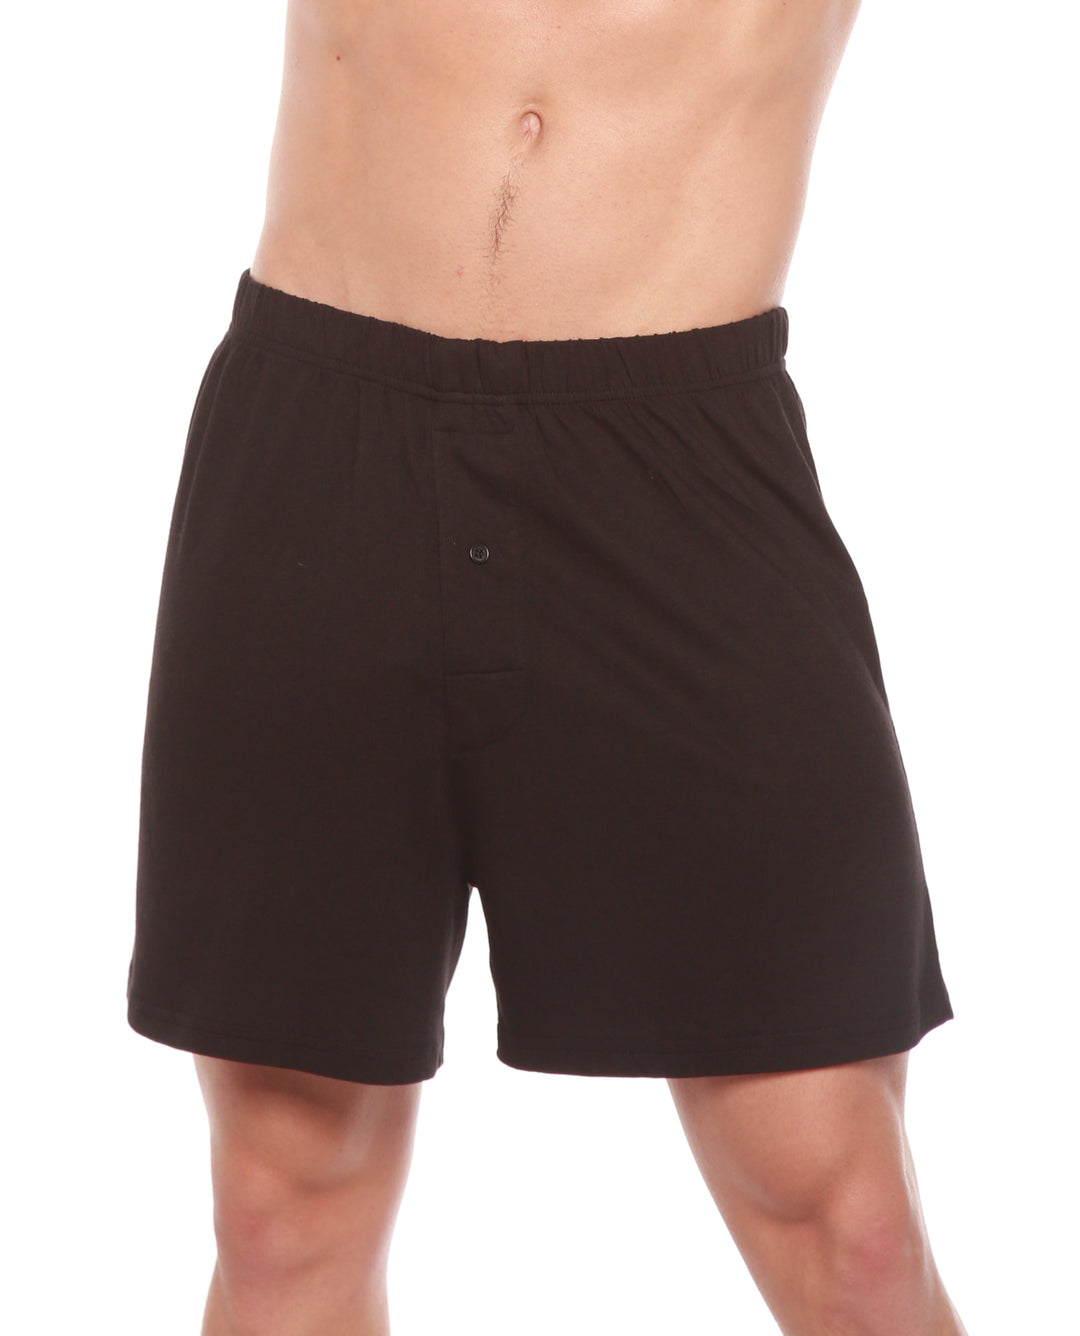 Cotton Printting Men's Boxer Short/Military Style Men's Underwear